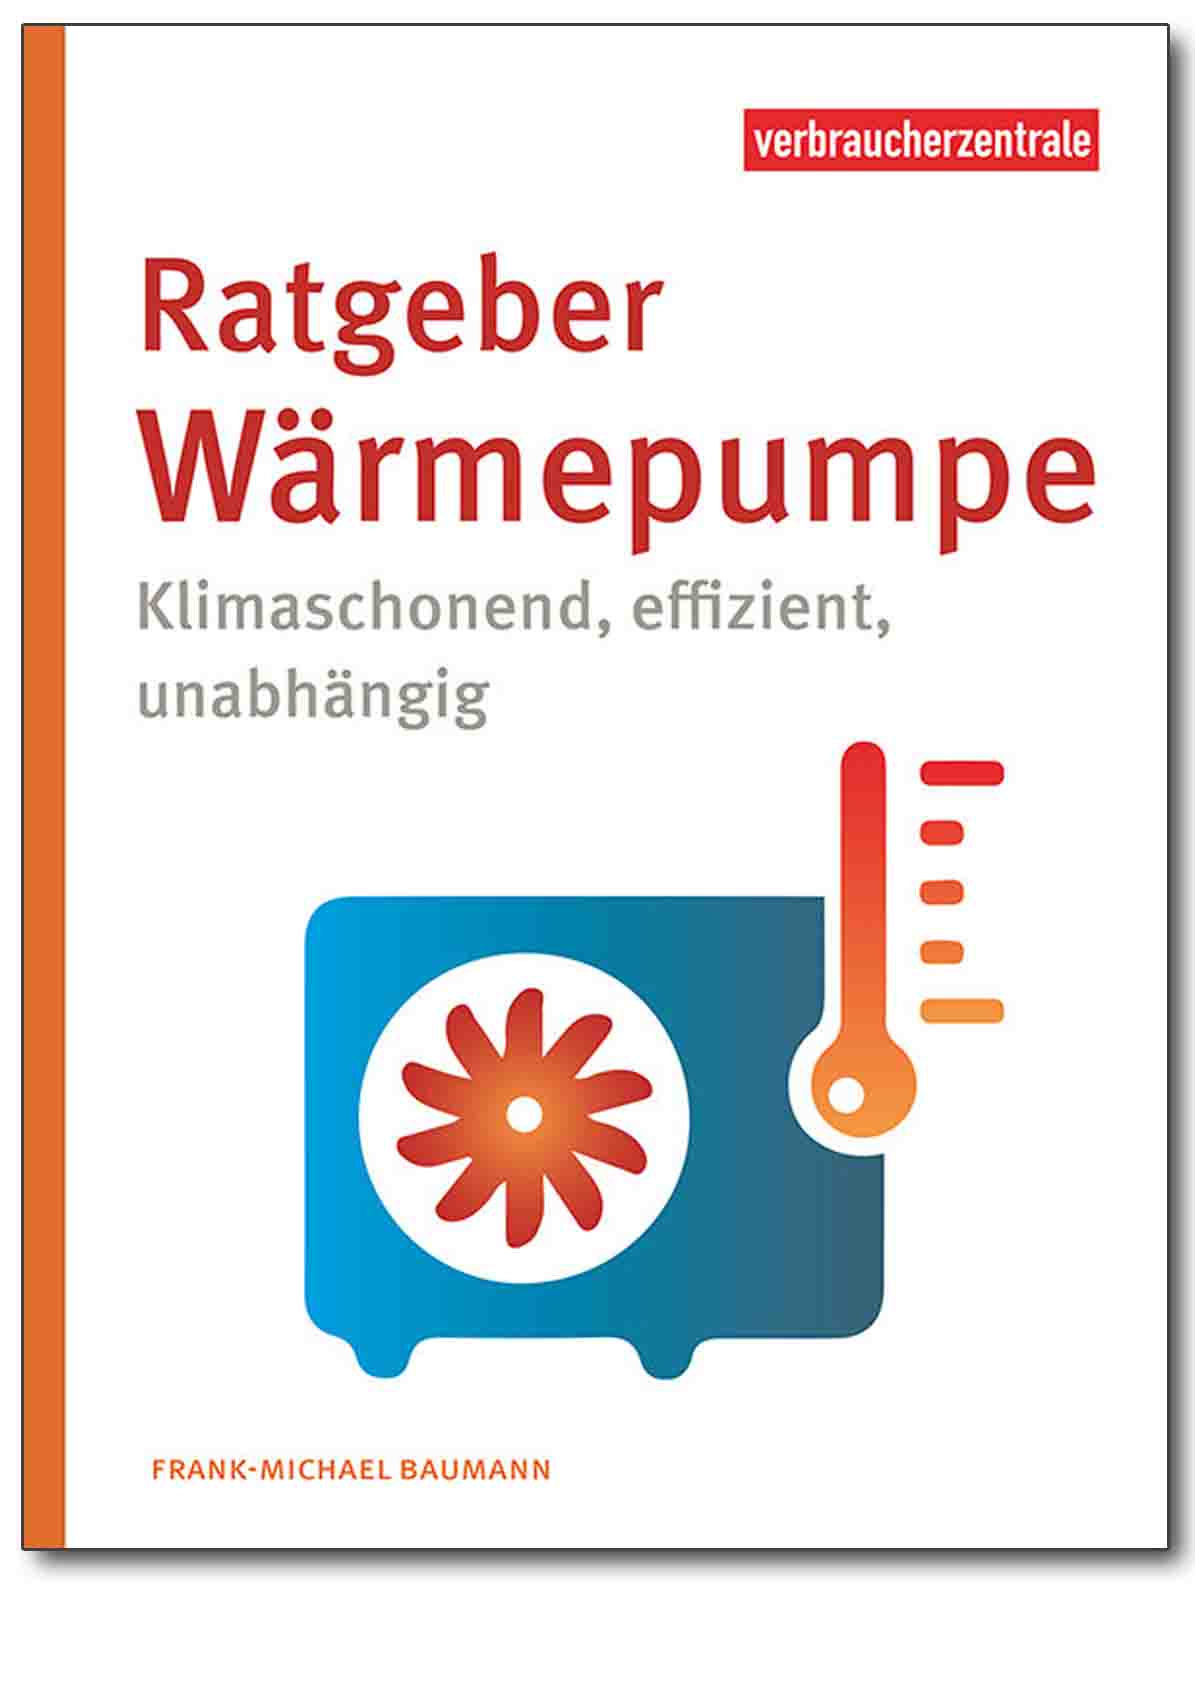 Buch - Ratgeber Wärmepumpe - Verbraucherzentrale